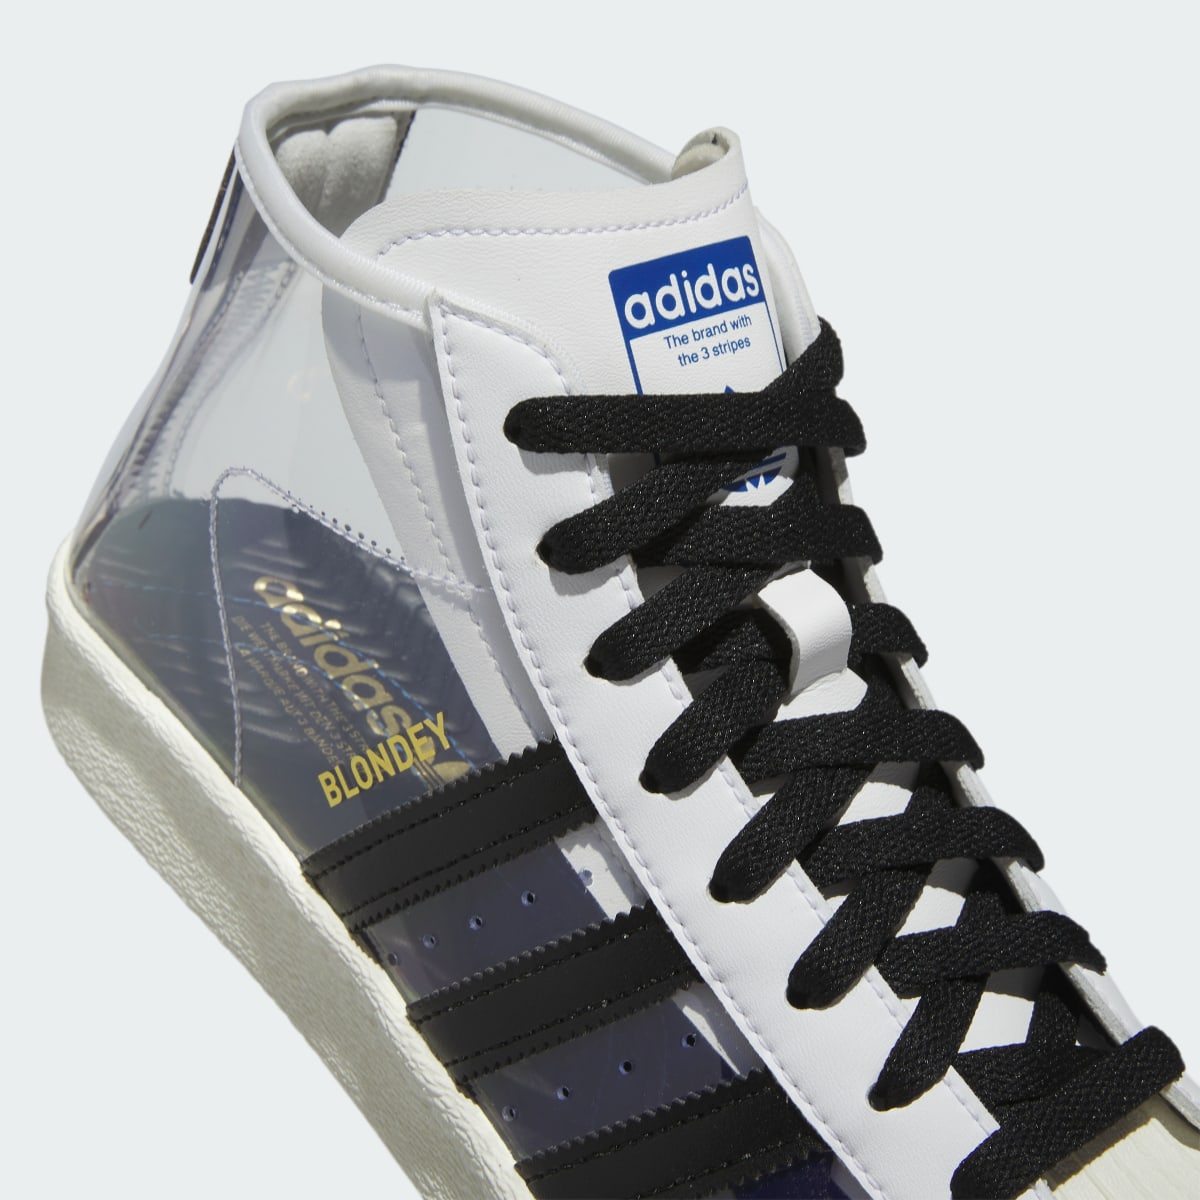 Adidas Blondey Pro Model ADV Shoes. 11